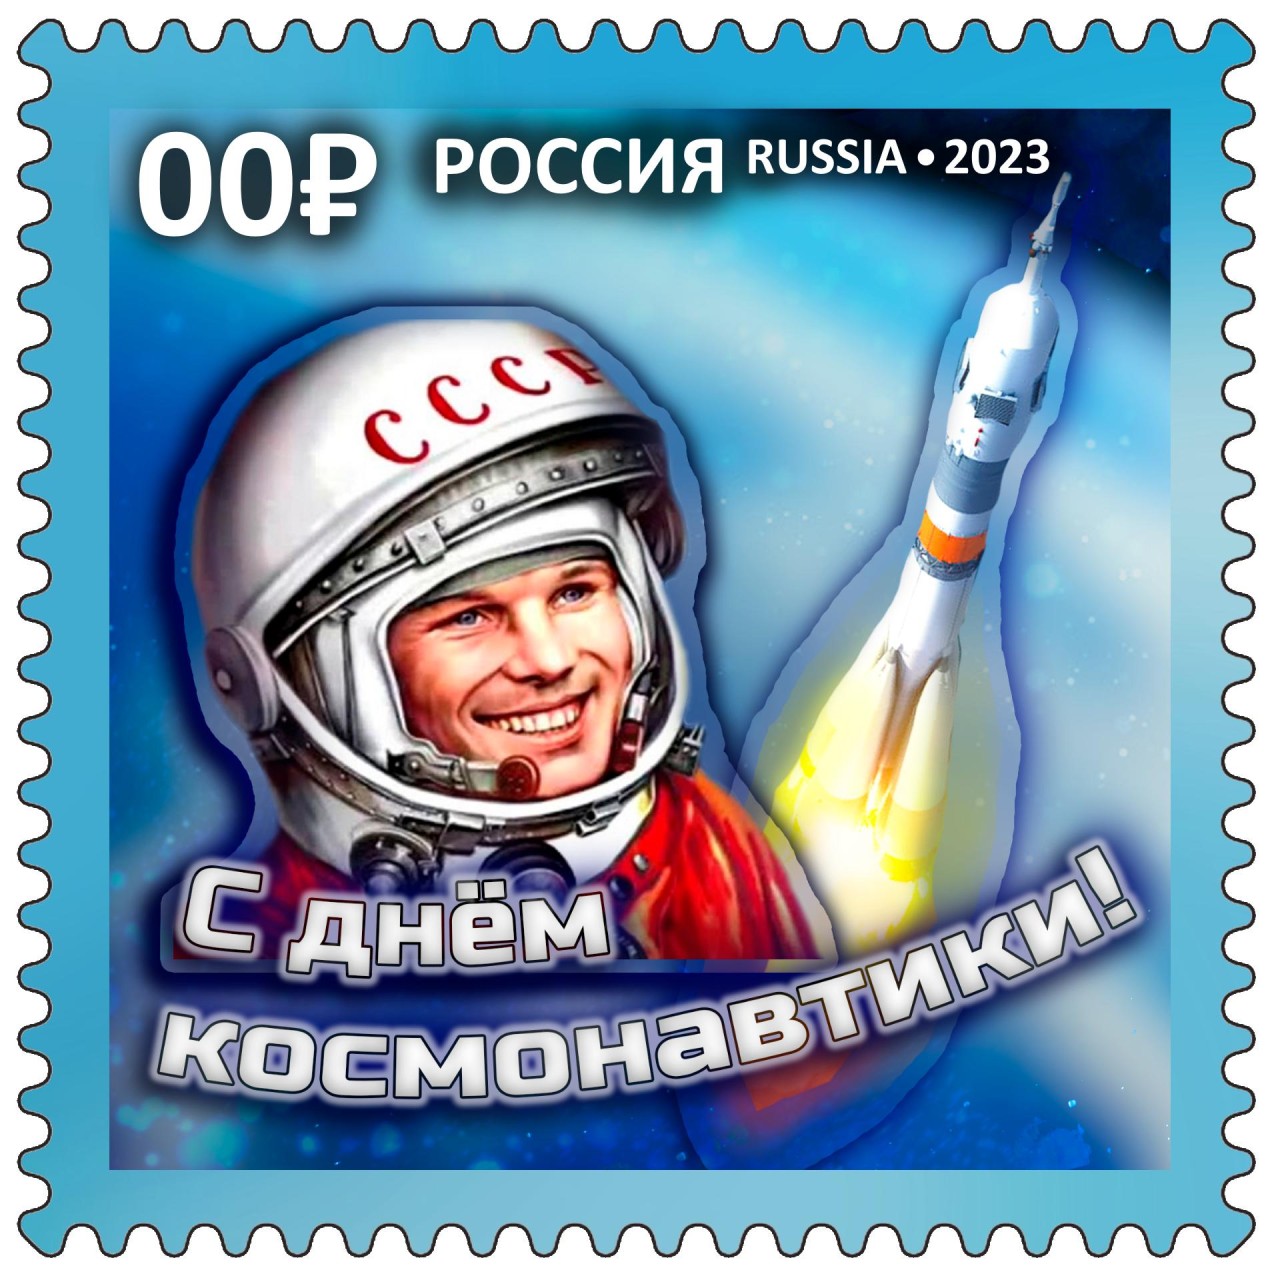 С днём космонавтики! Юрий Гагарин